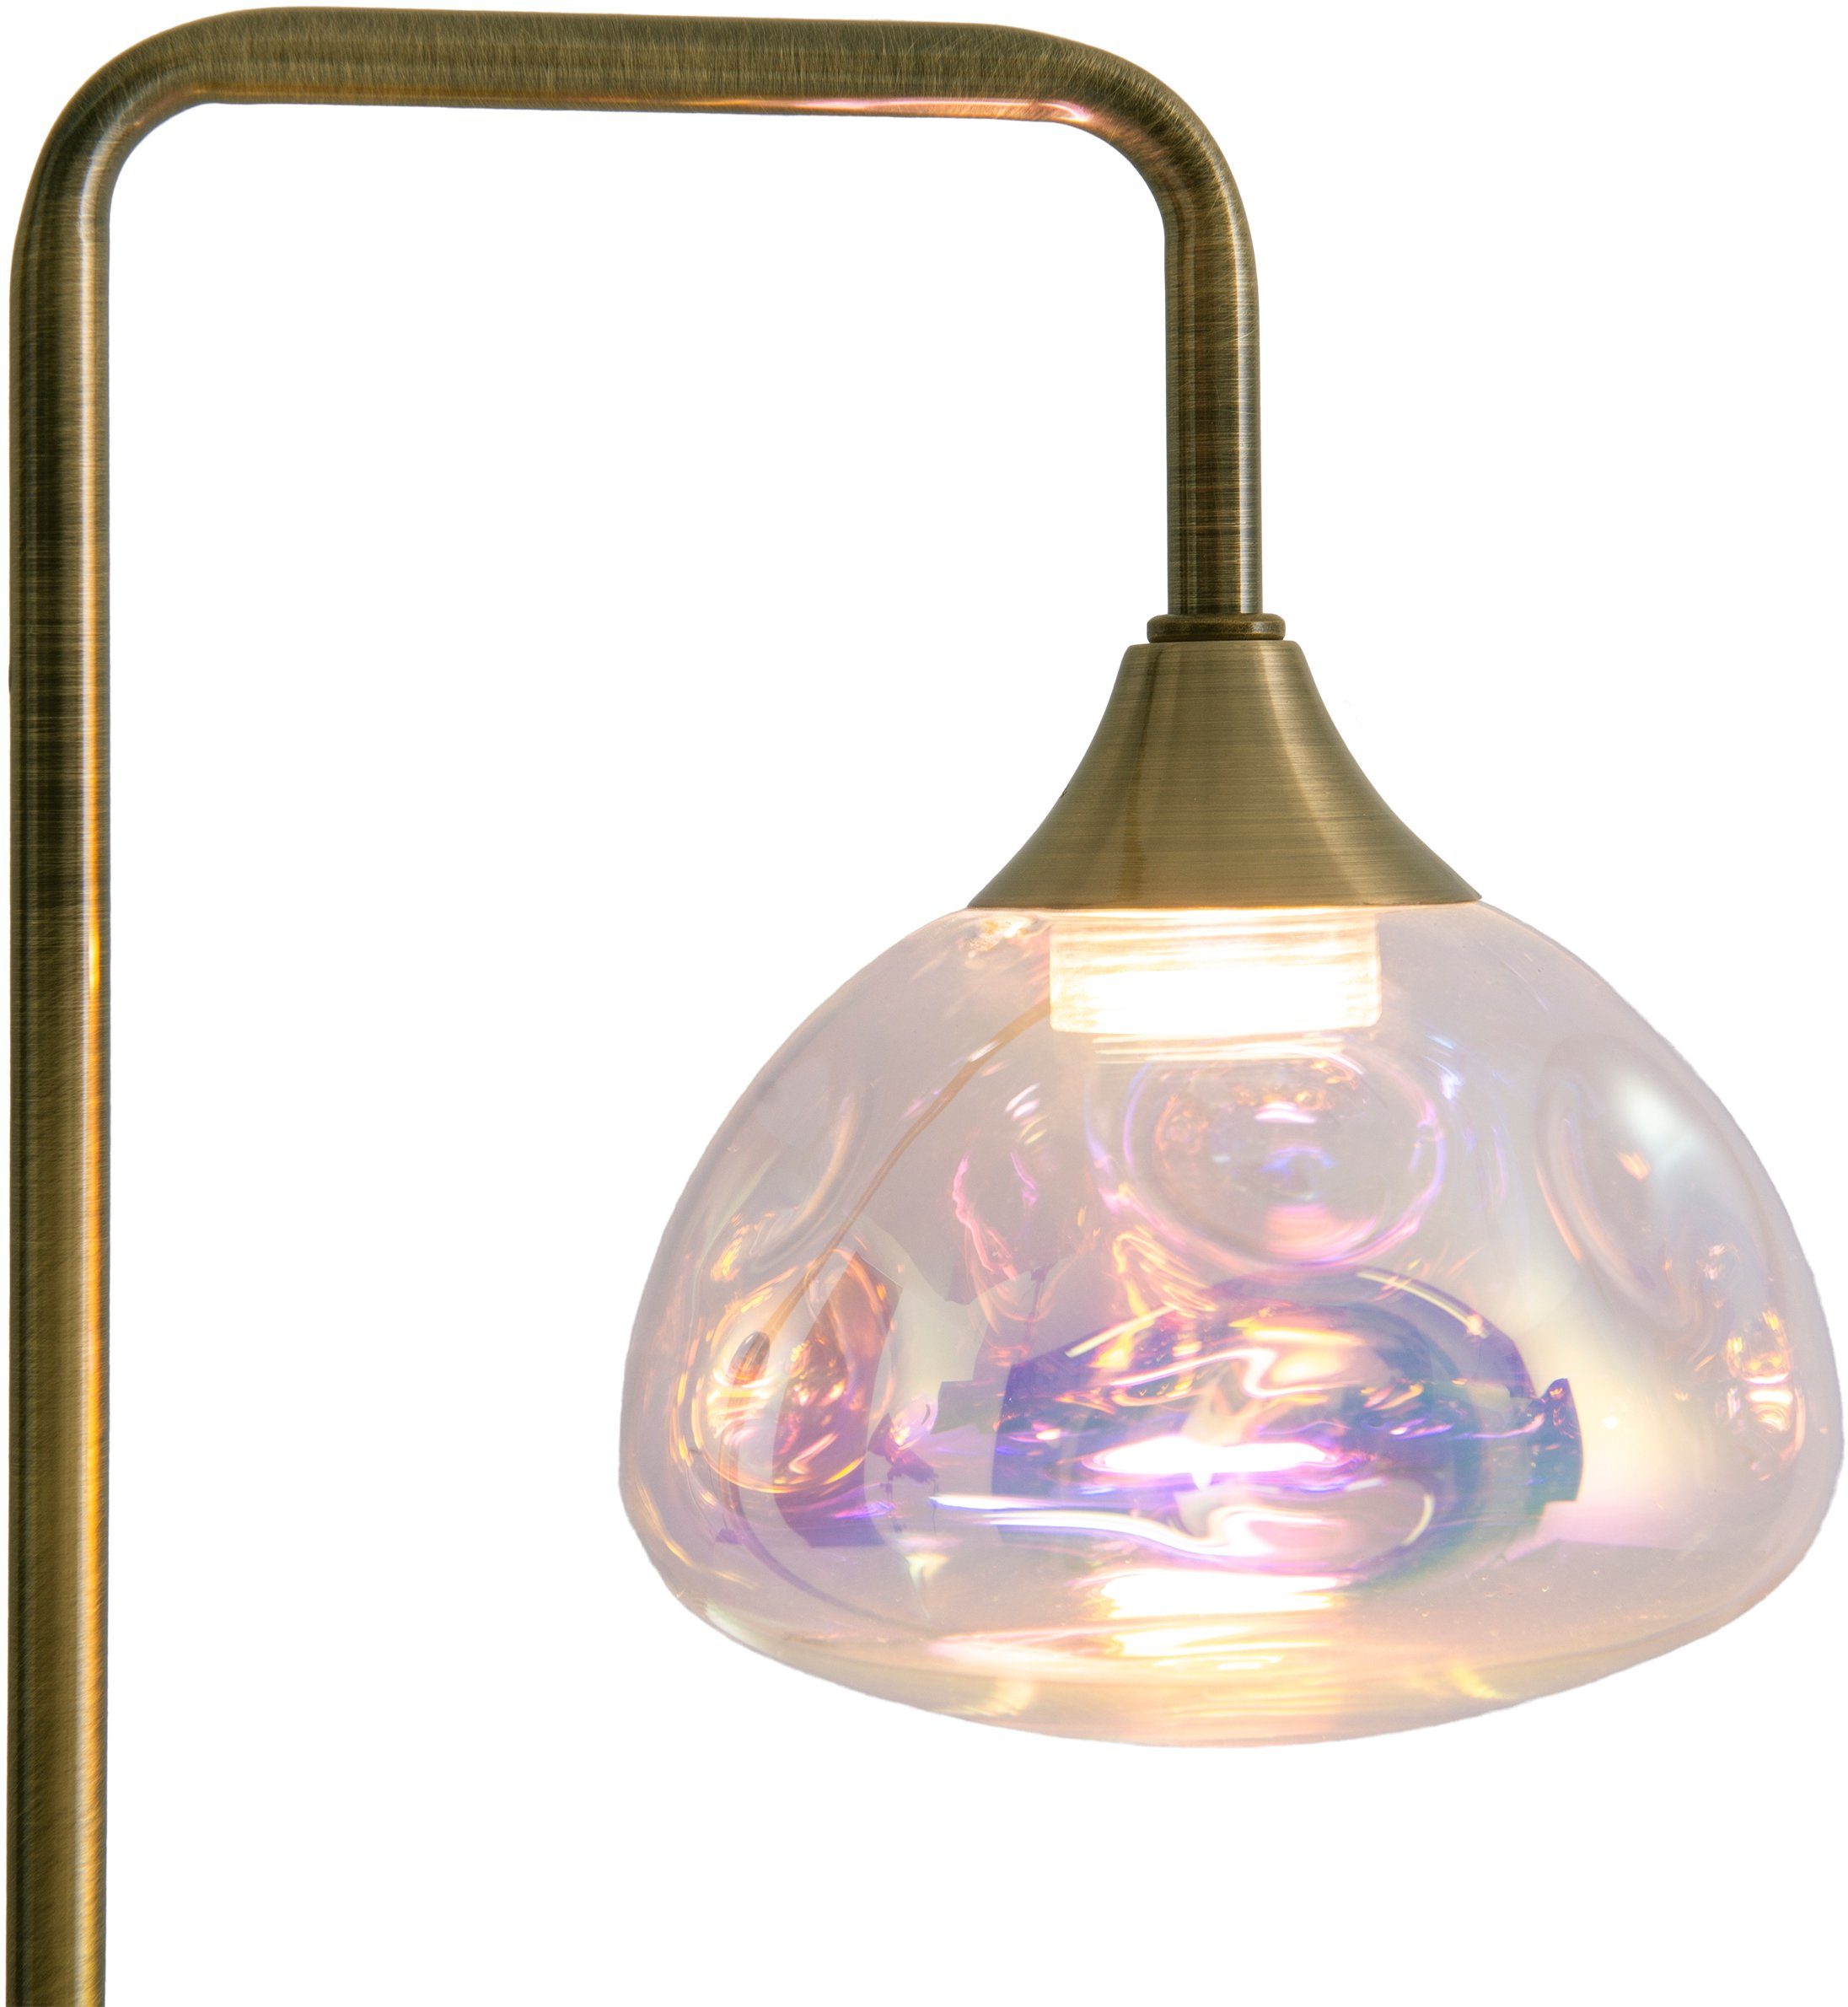 Tischleuchte LED fest 1 LEDs Gestell LED warmweiß flg. messing irisierendes Varna, näve integriert, Warmweiß, incl. Glas 6